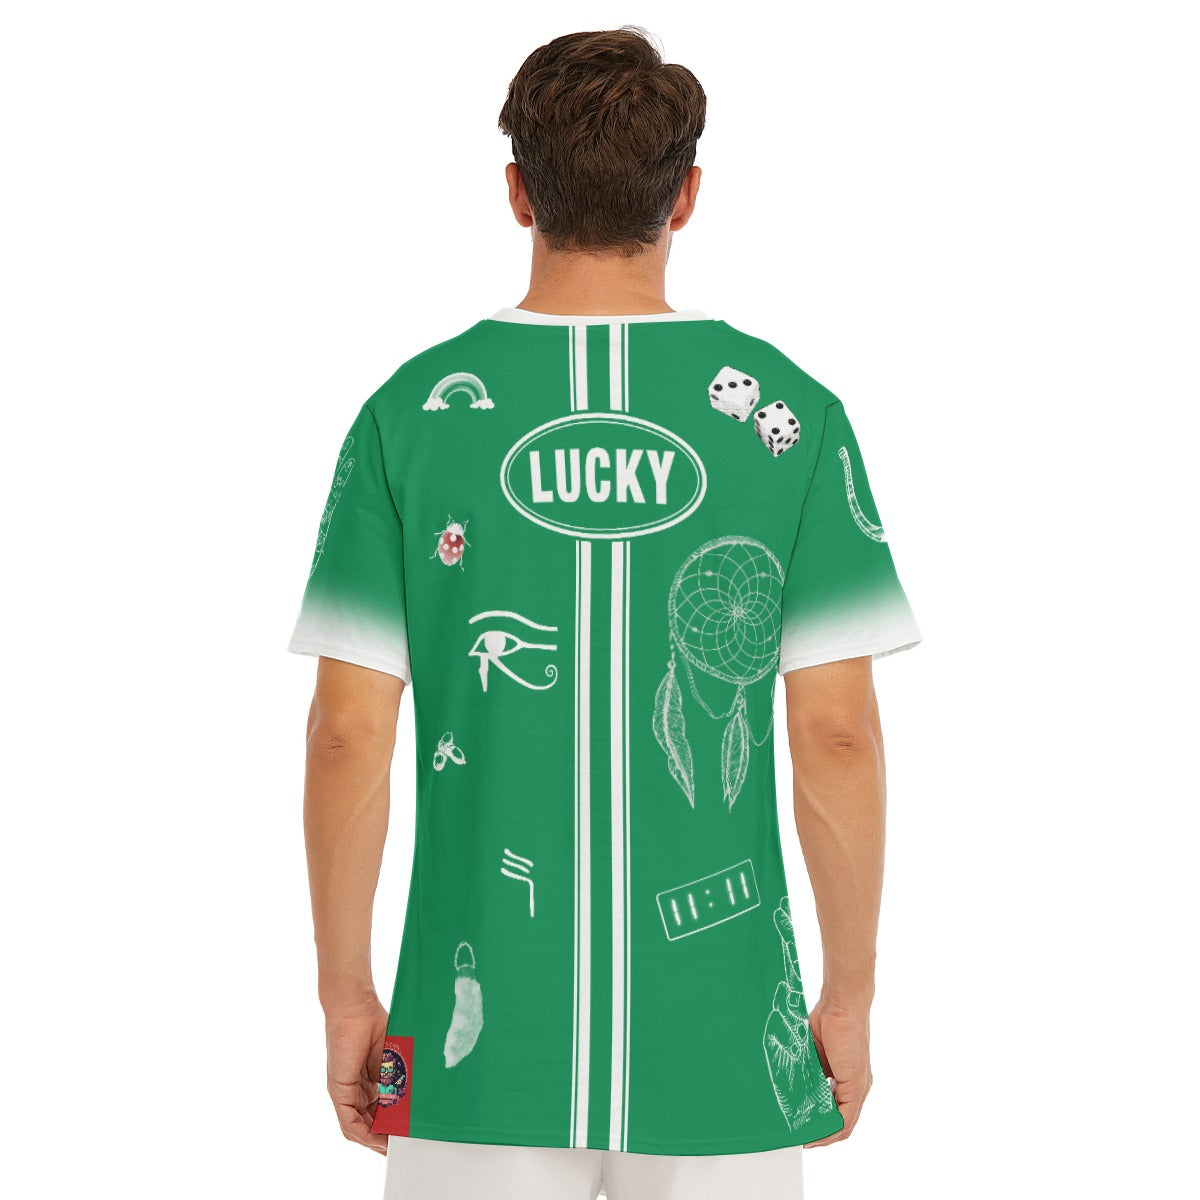 Lucky T-shirt | Loose Neck Cotton Tee